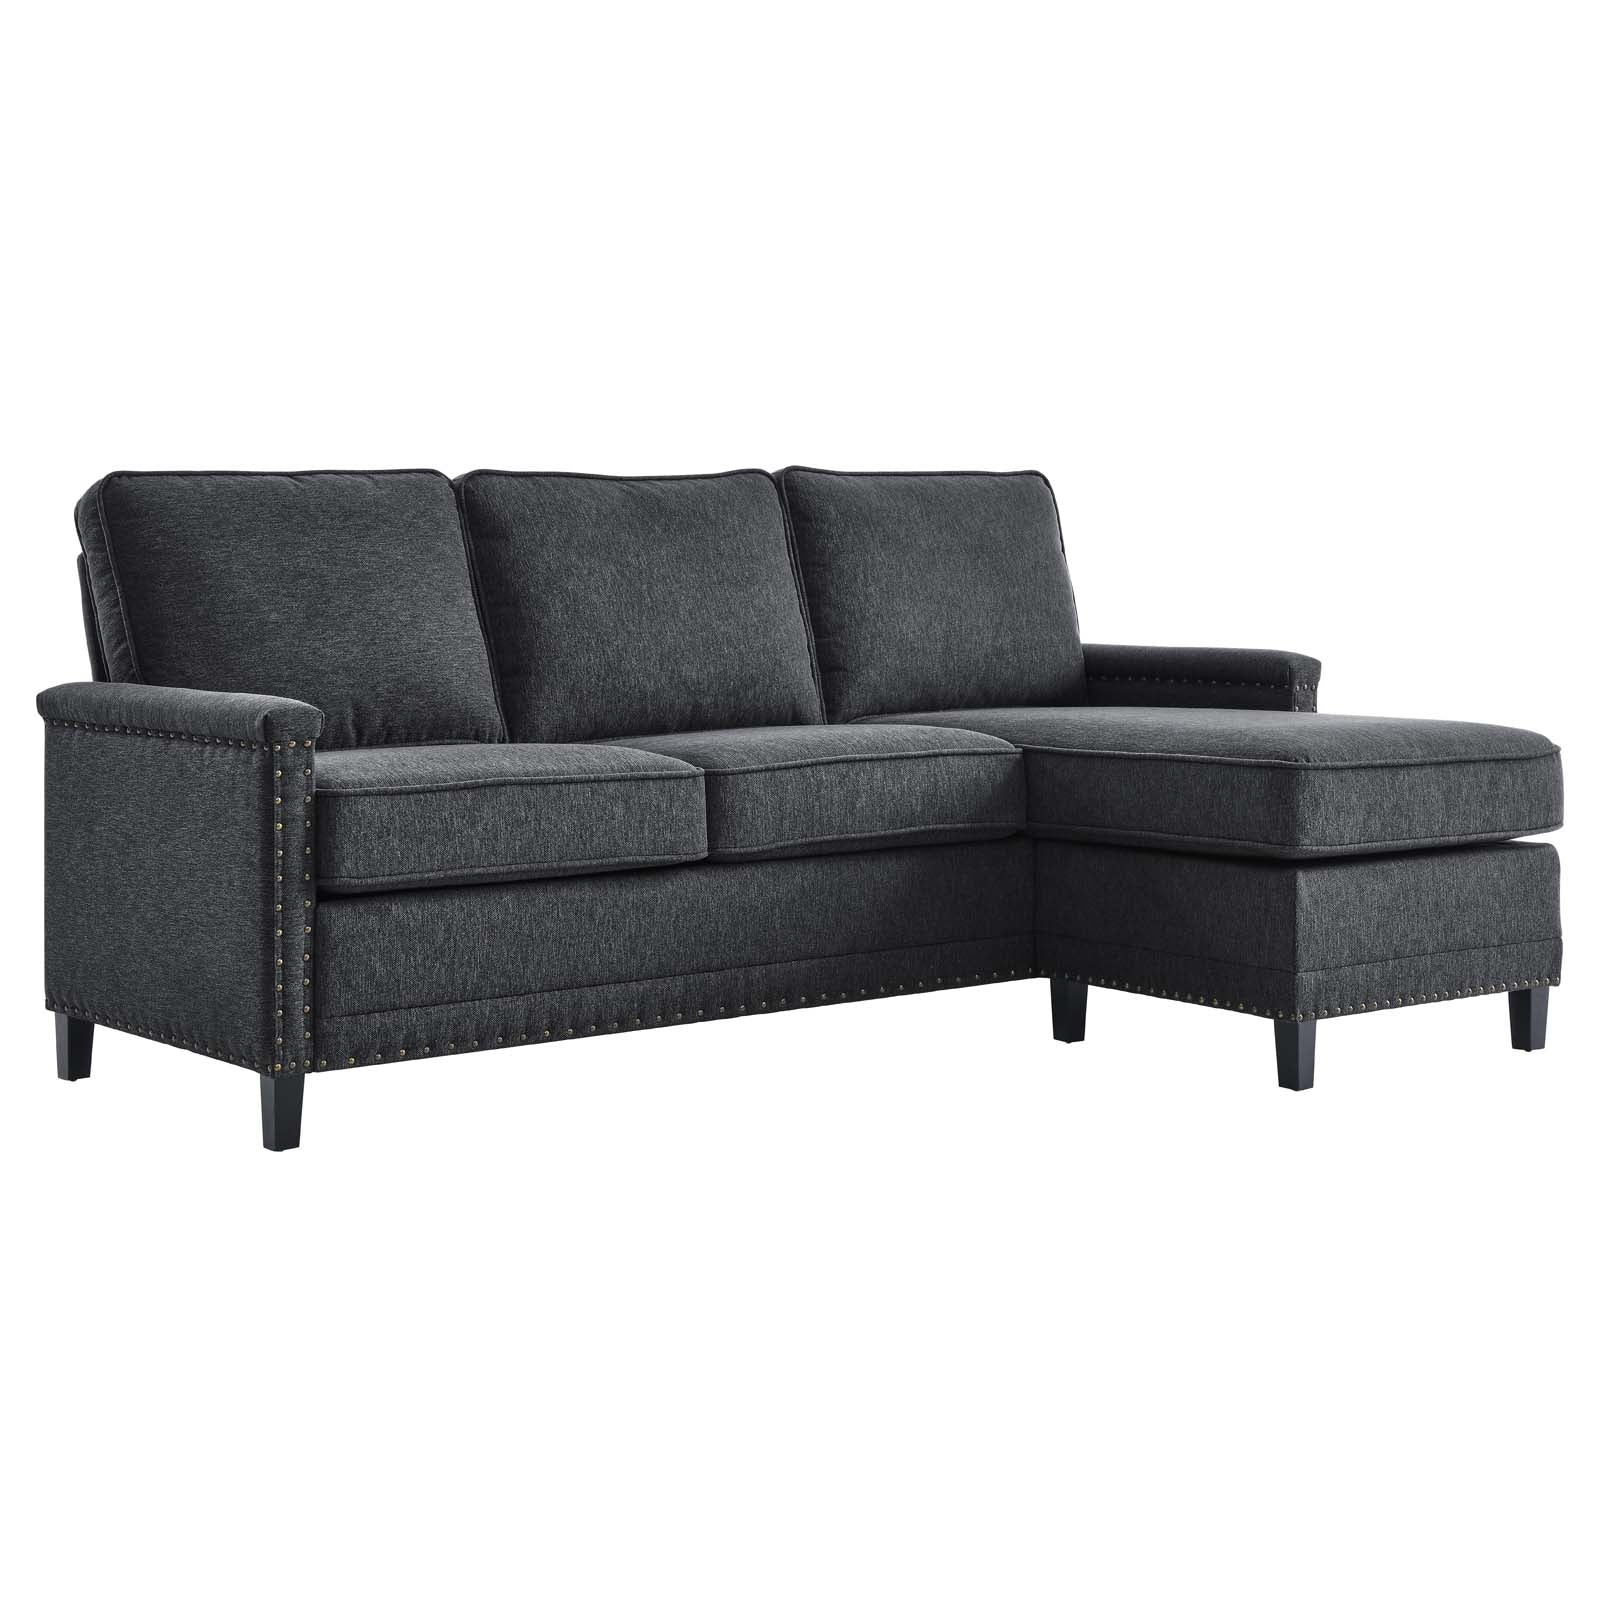 Modway Sectional Sofas - Ashton Upholstered Fabric Sectional Sofa Charcoal